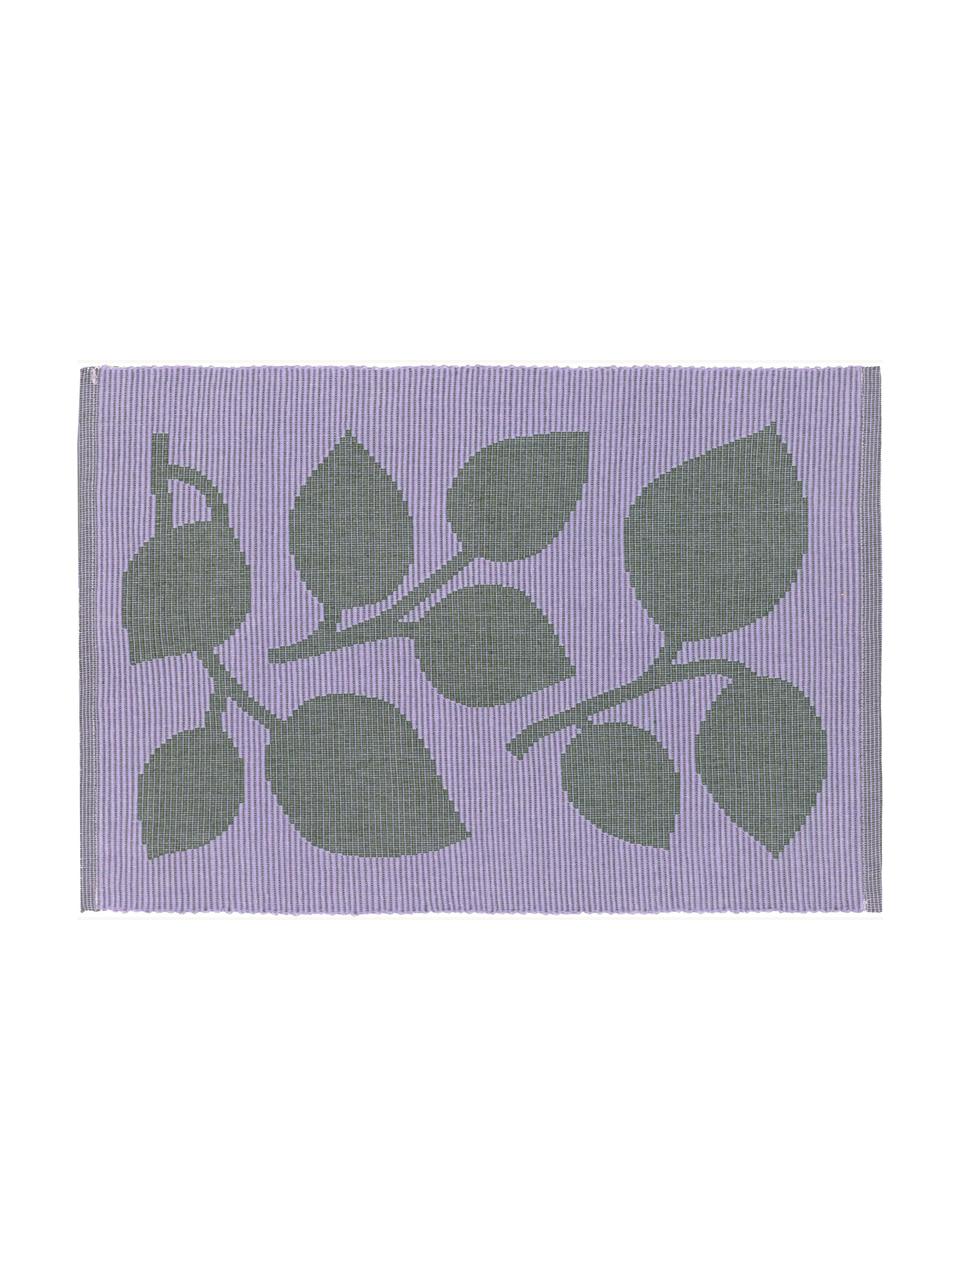 Tischsets Natura, 6 Stück, 82 % Baumwolle, 18 % Polyester, GRS-zertifiziert, Lavendel, Olivgrün, B 30 x L 43 cm